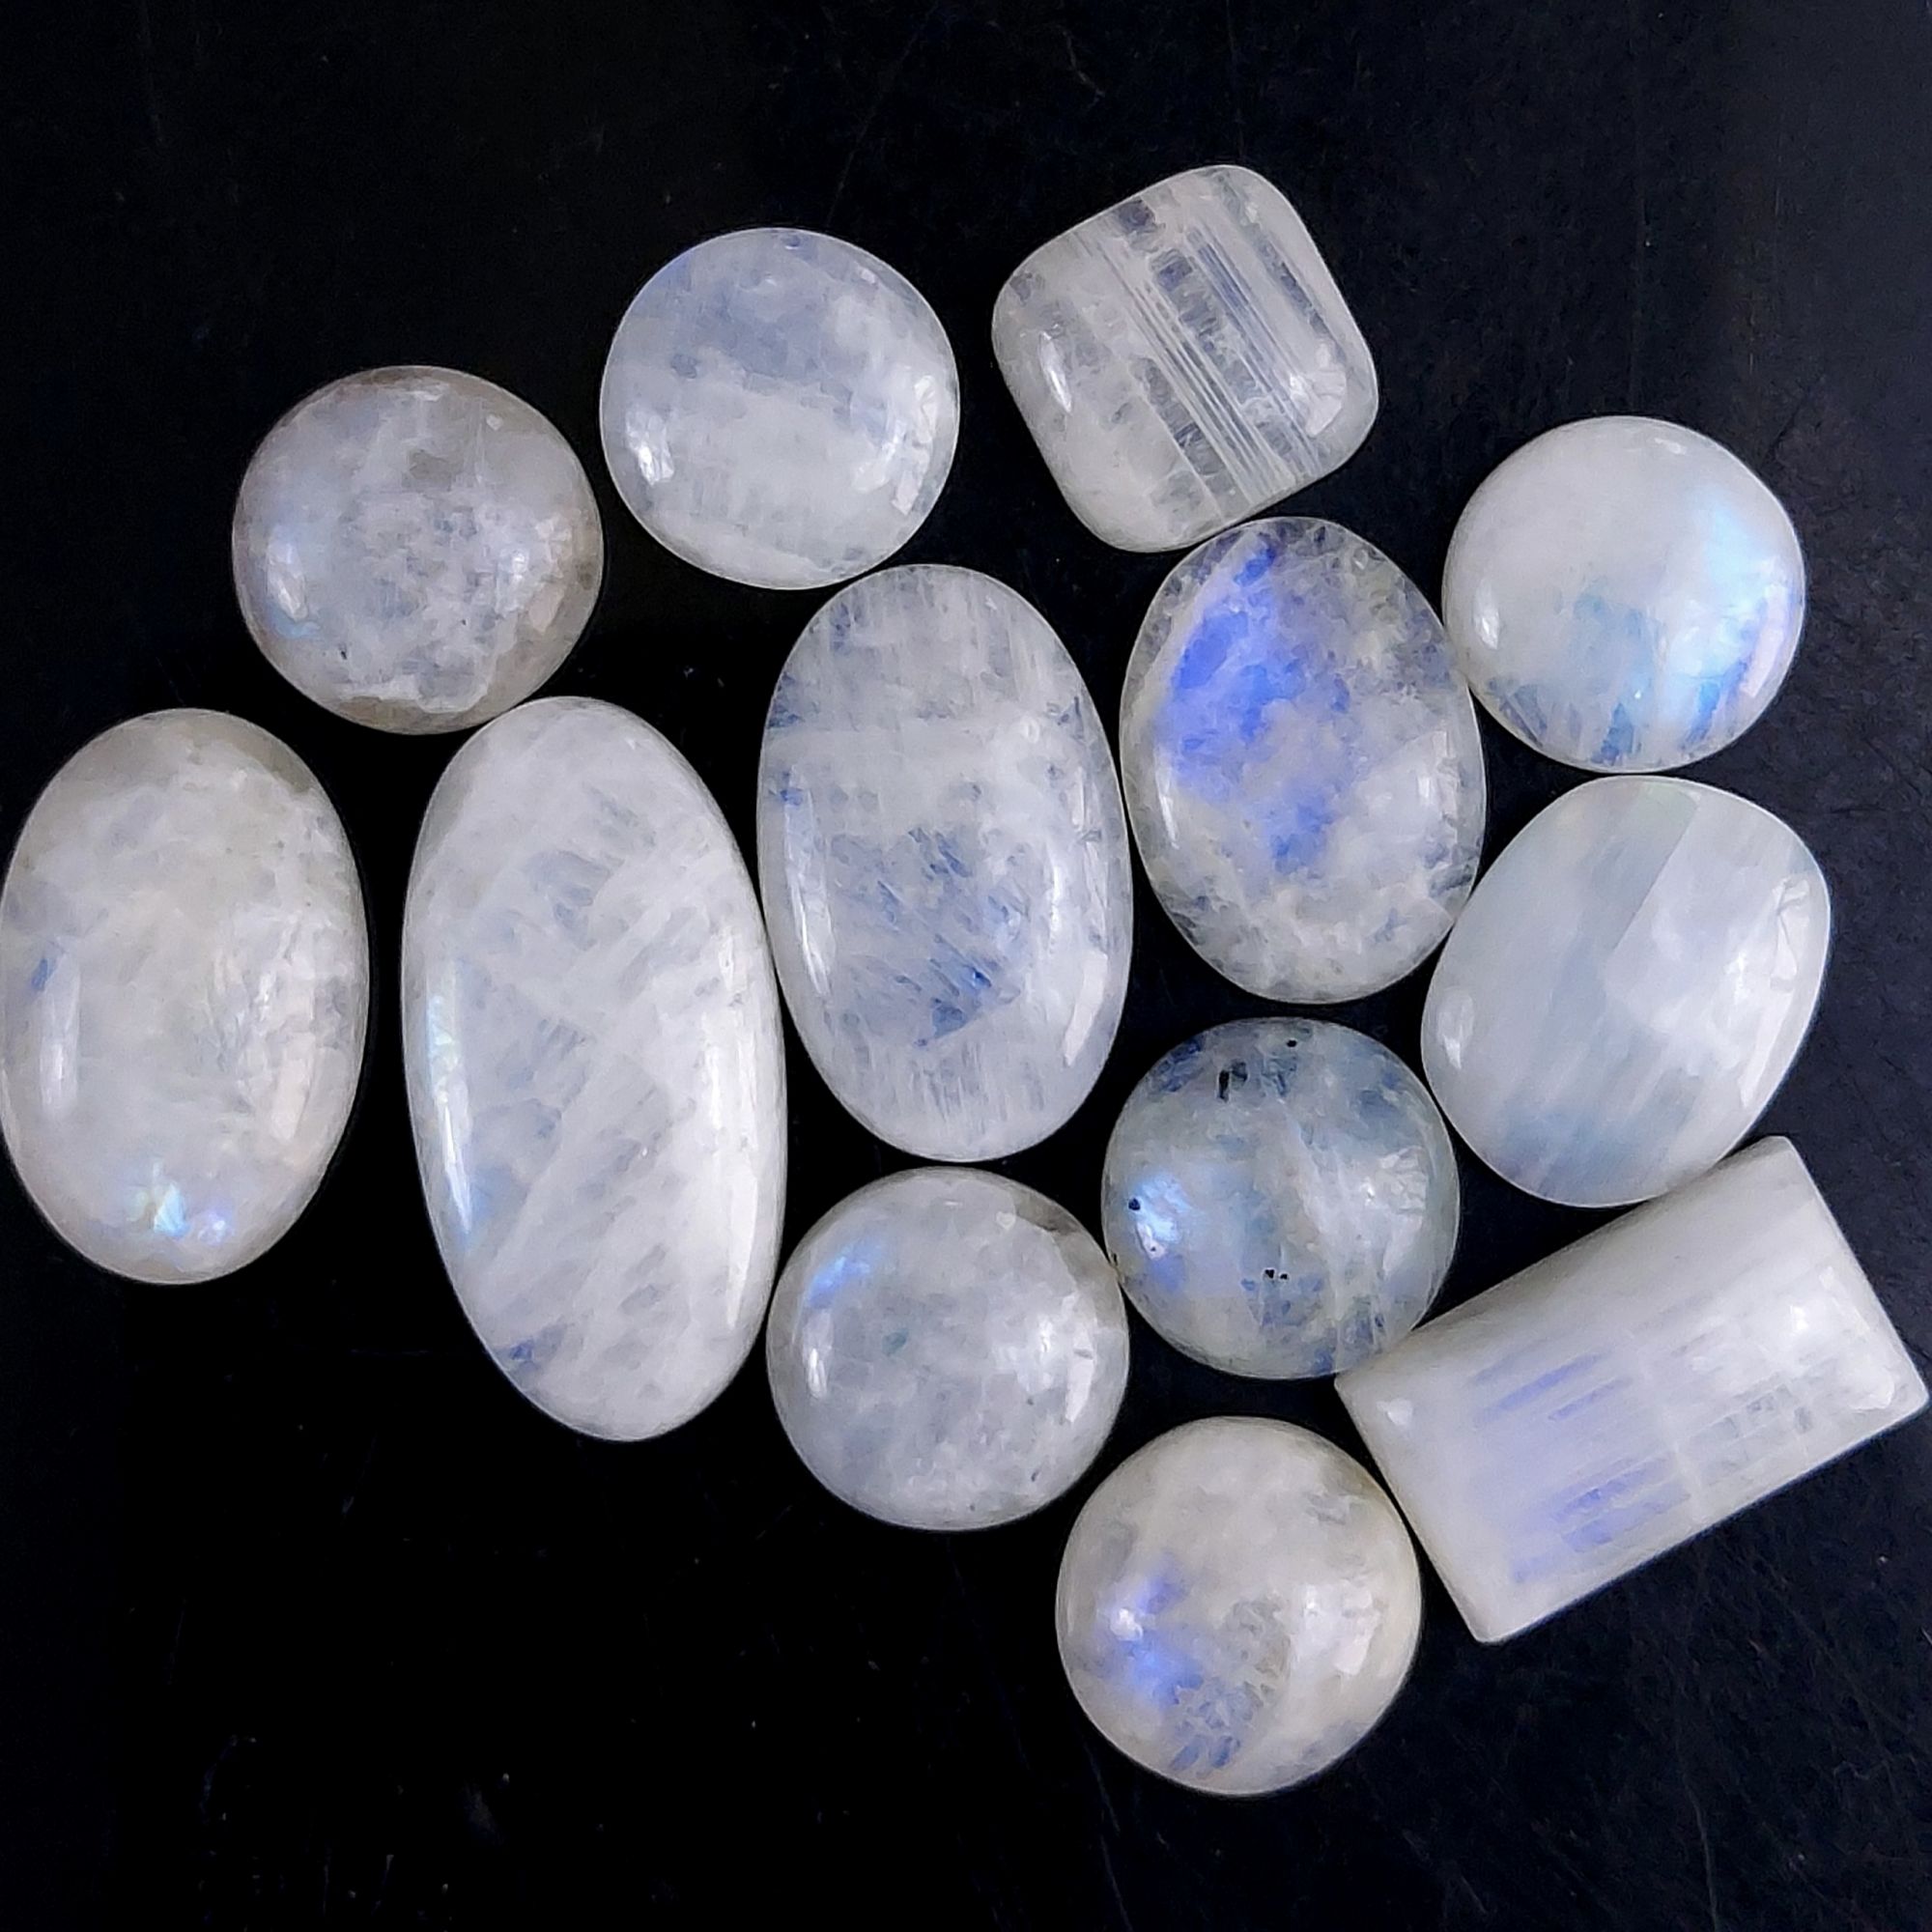 13Pcs 264Cts Natural Rainbow Cabochon Gemstone For Jewelry Making Crystal Cabochon Semi-Precious Rainbow Moonstone Flat Back Gemstone Lot 35x15 16x16mm#677